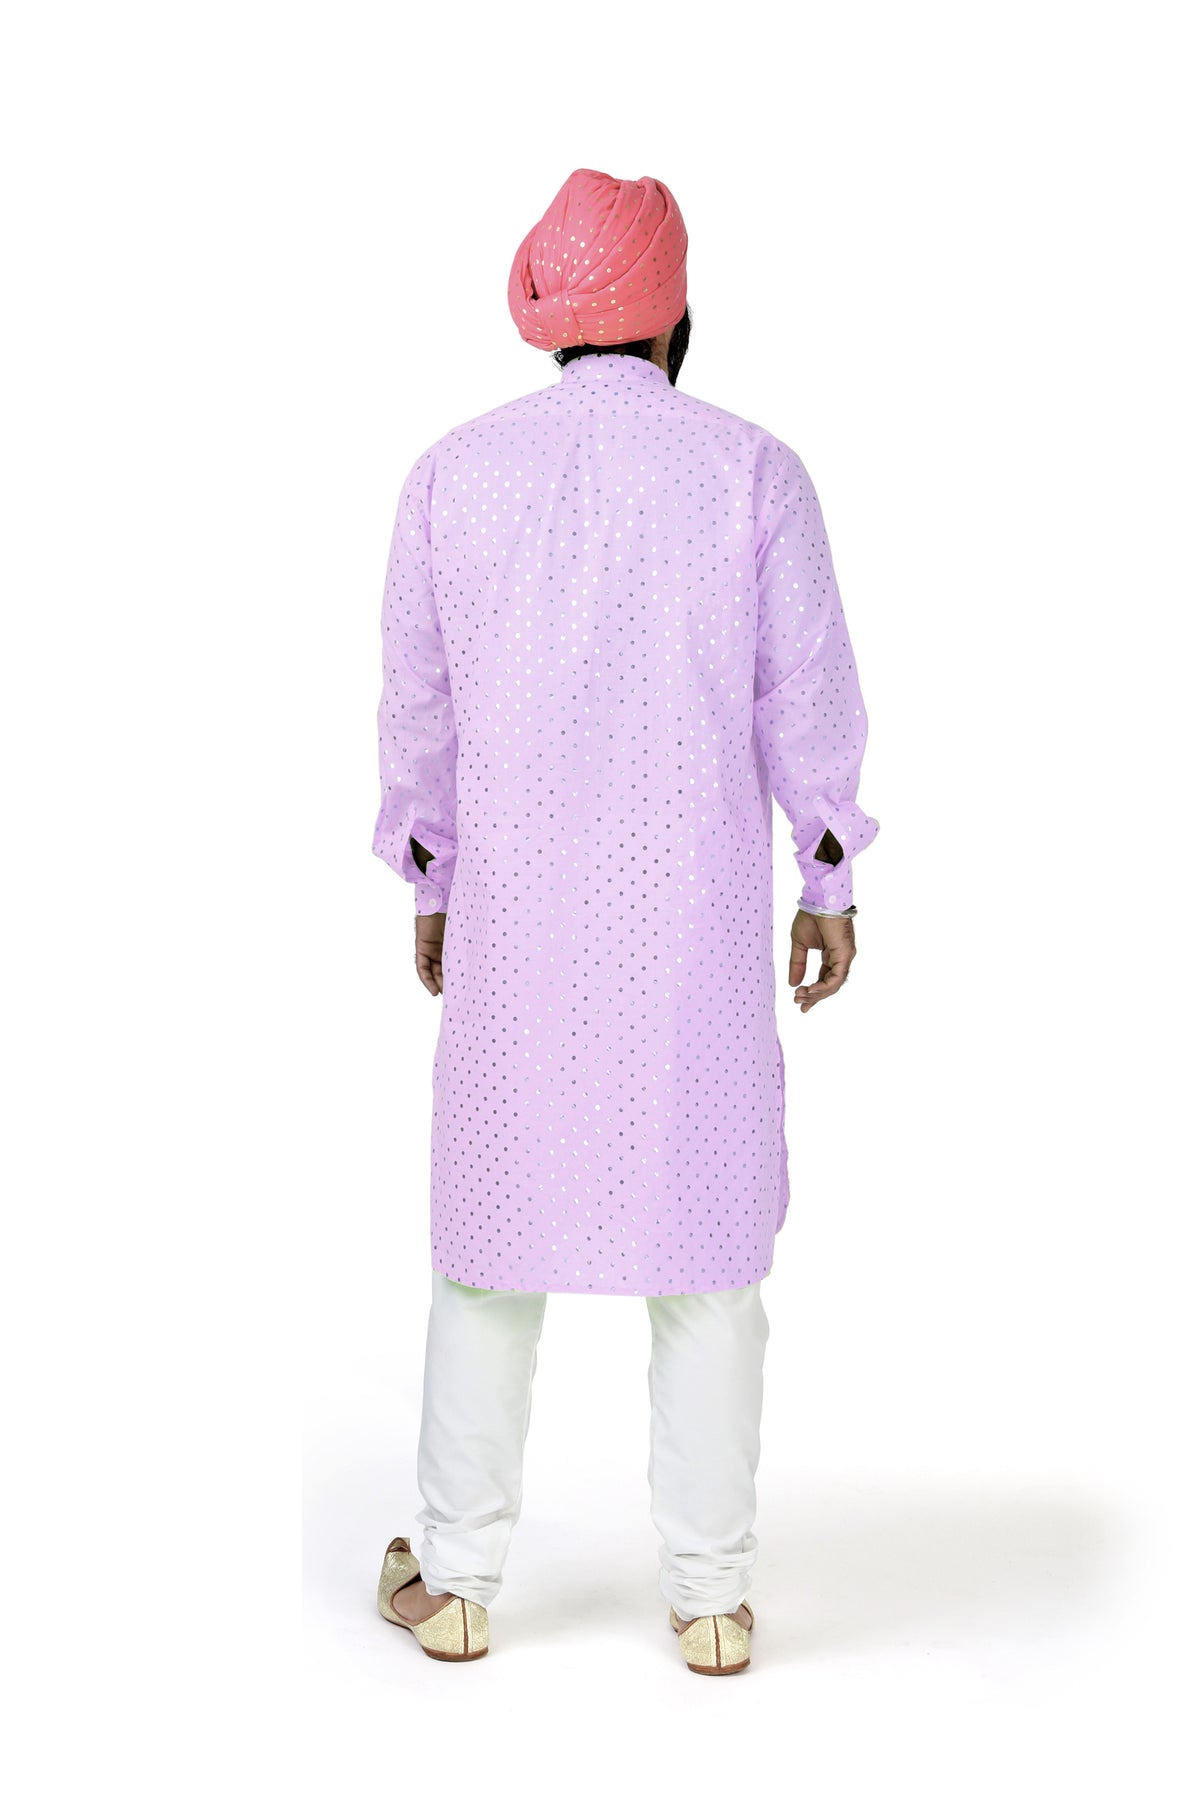 RANJA Cotton Tunic - Back View - Harleen Kaur - South Asian Menswear